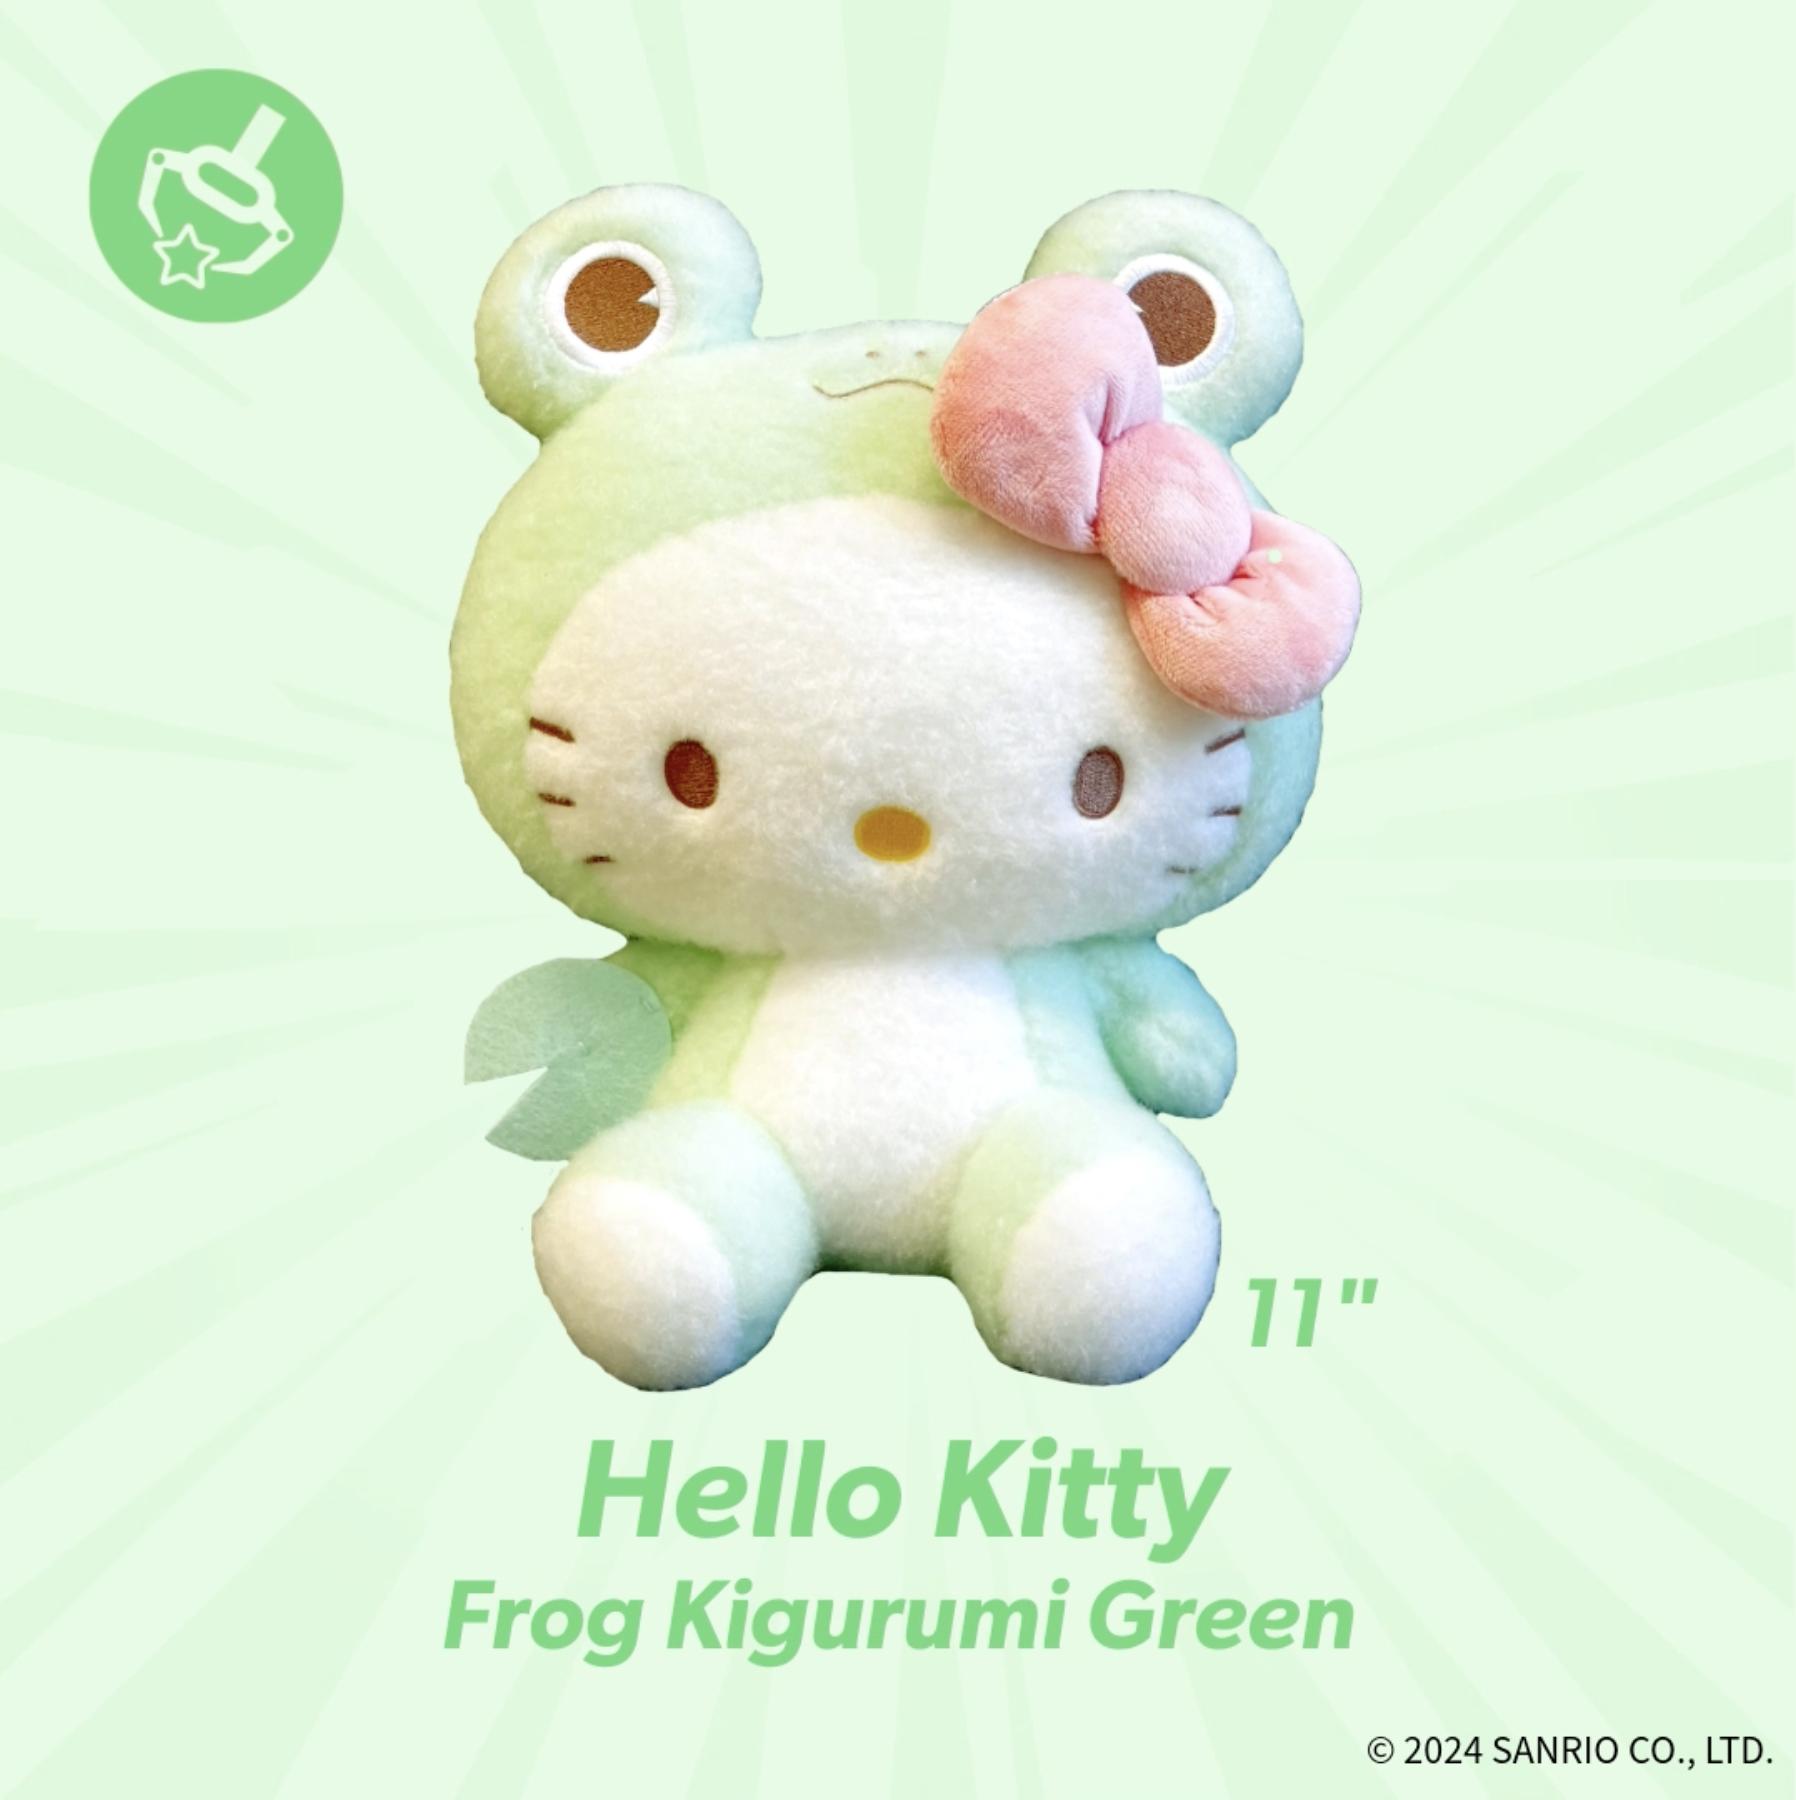 Round1 Arcade Crace Game Sanrio Hello Kitty Frog Kigurumi Green plushie 11 " 